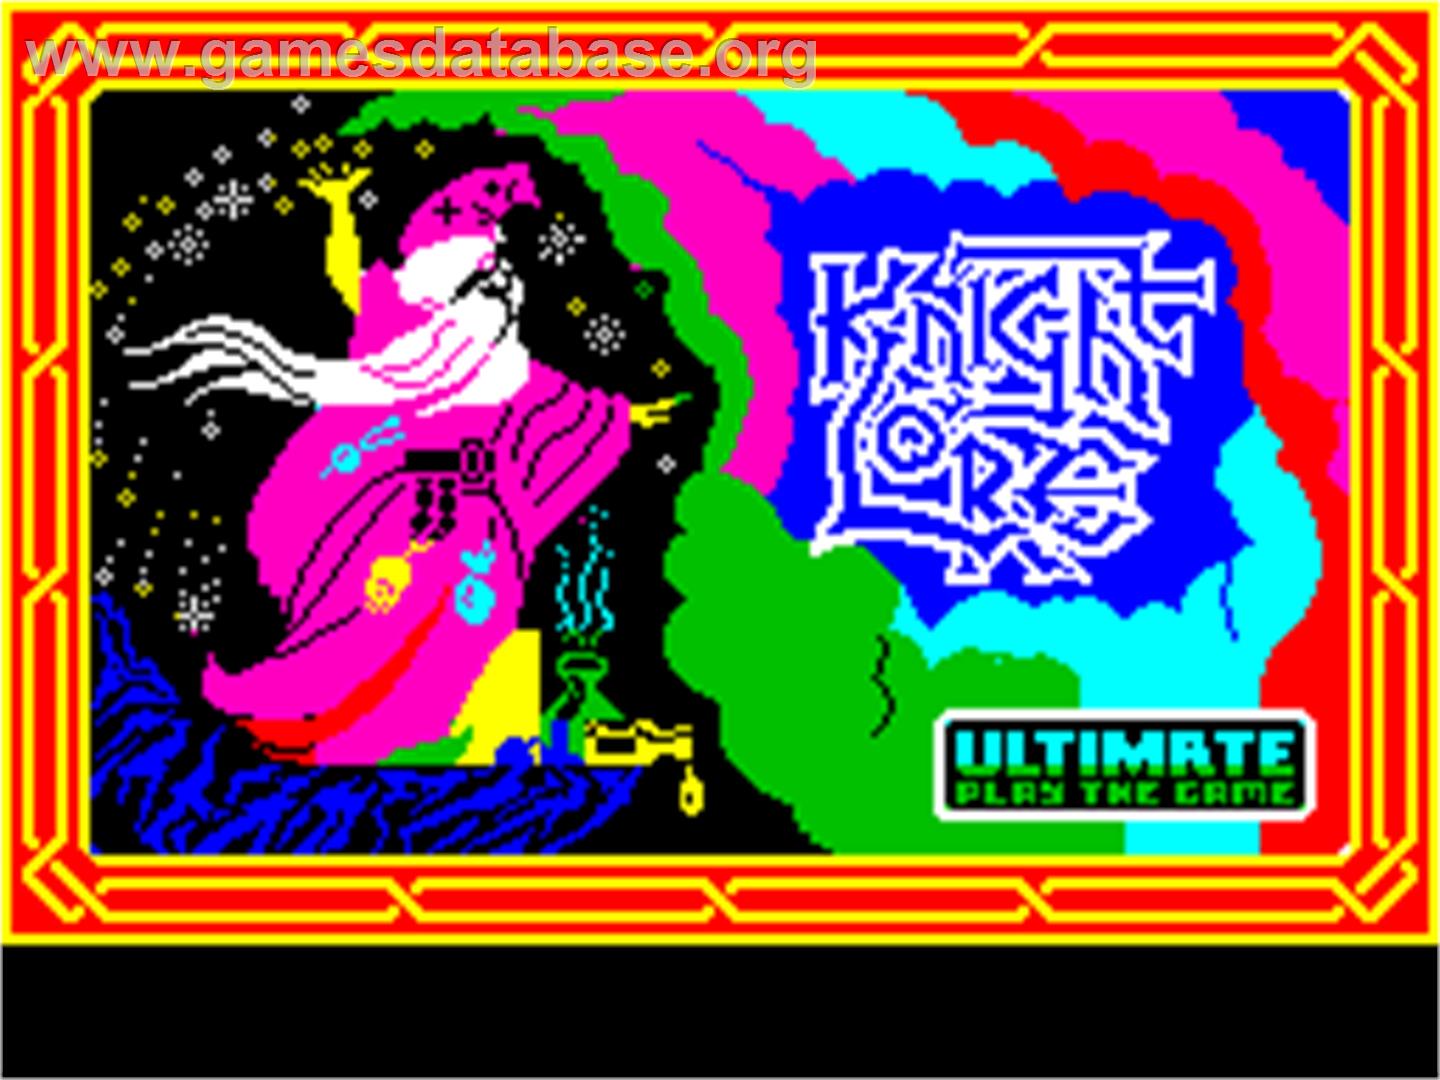 Knight Lore - Sinclair ZX Spectrum - Artwork - Title Screen